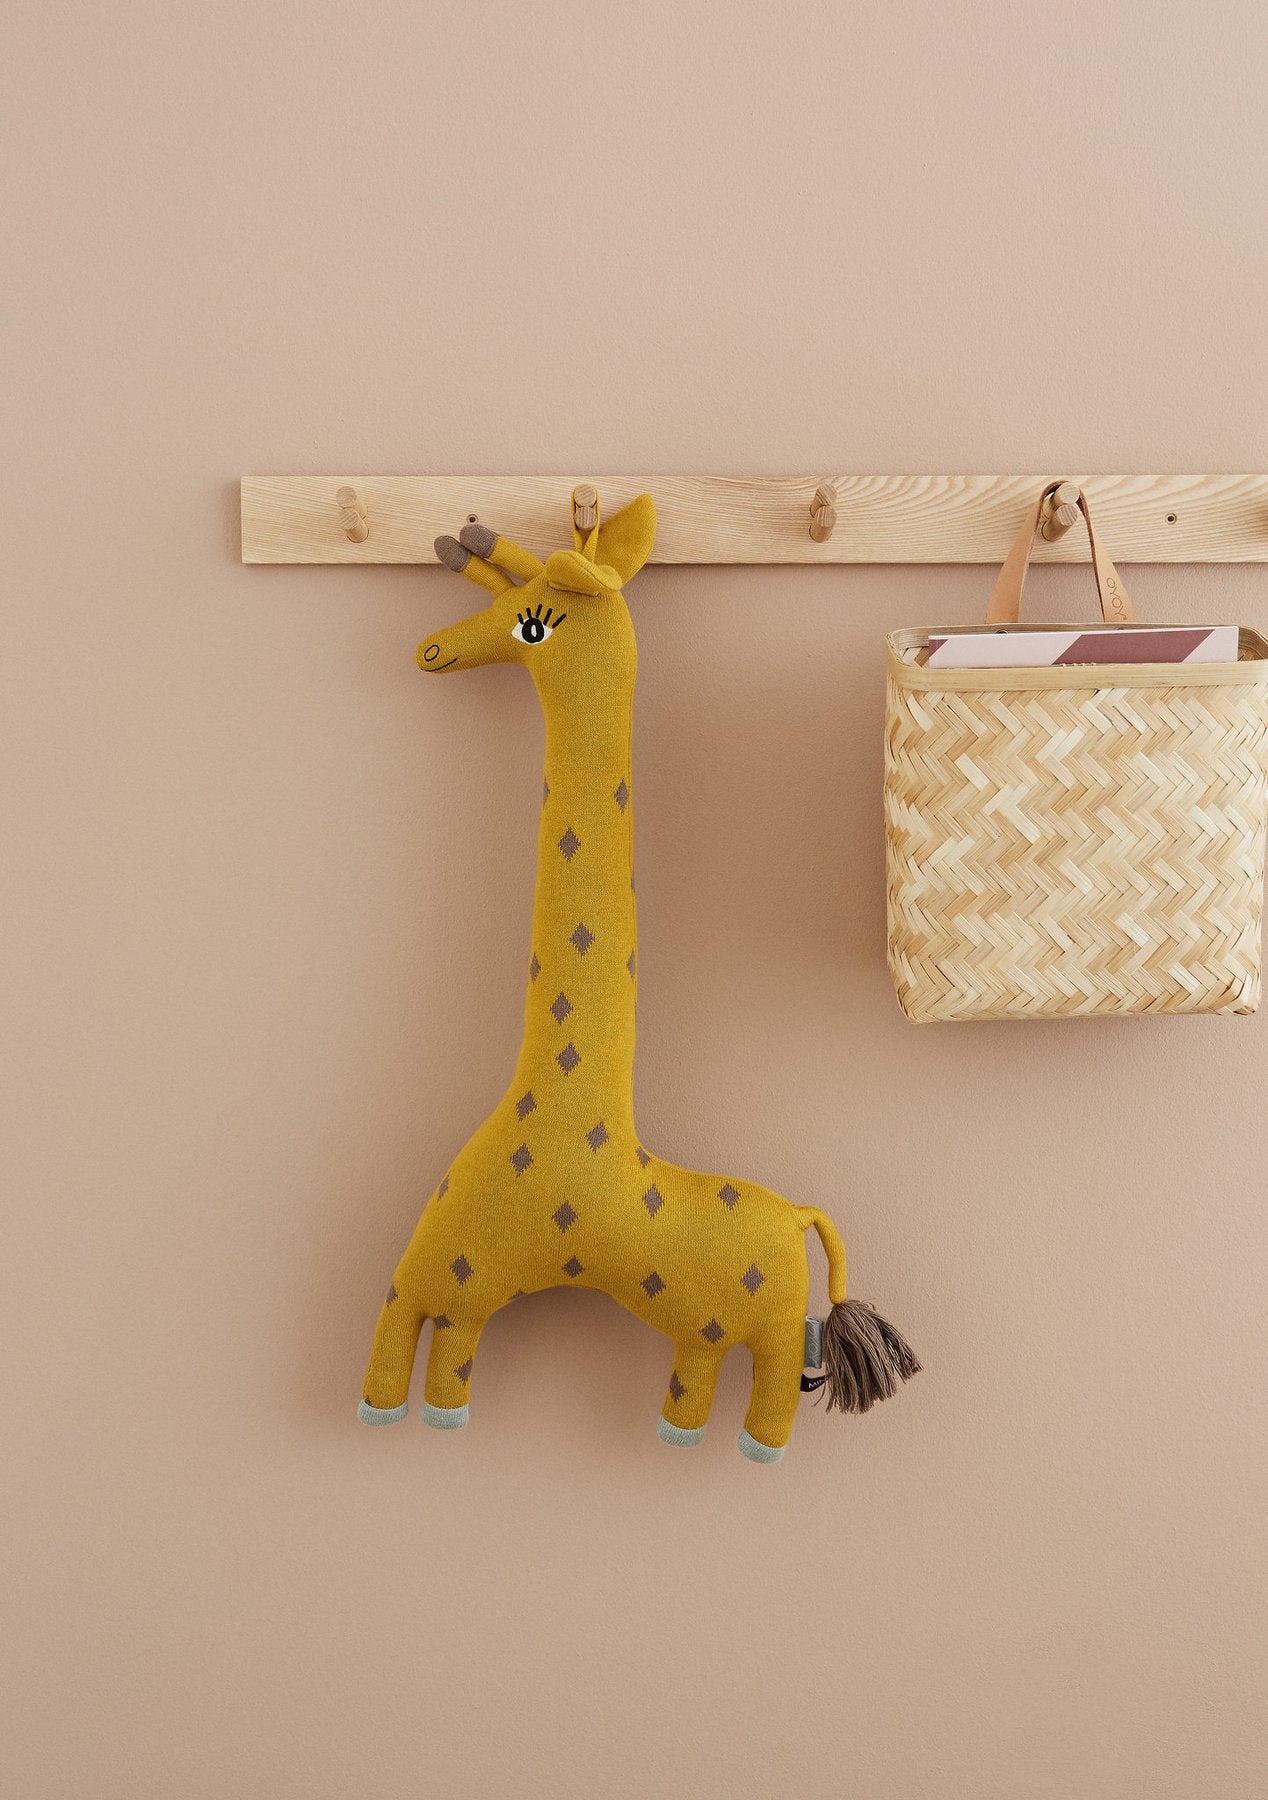 OyOy cushion giraffe Noah, mustard yellow